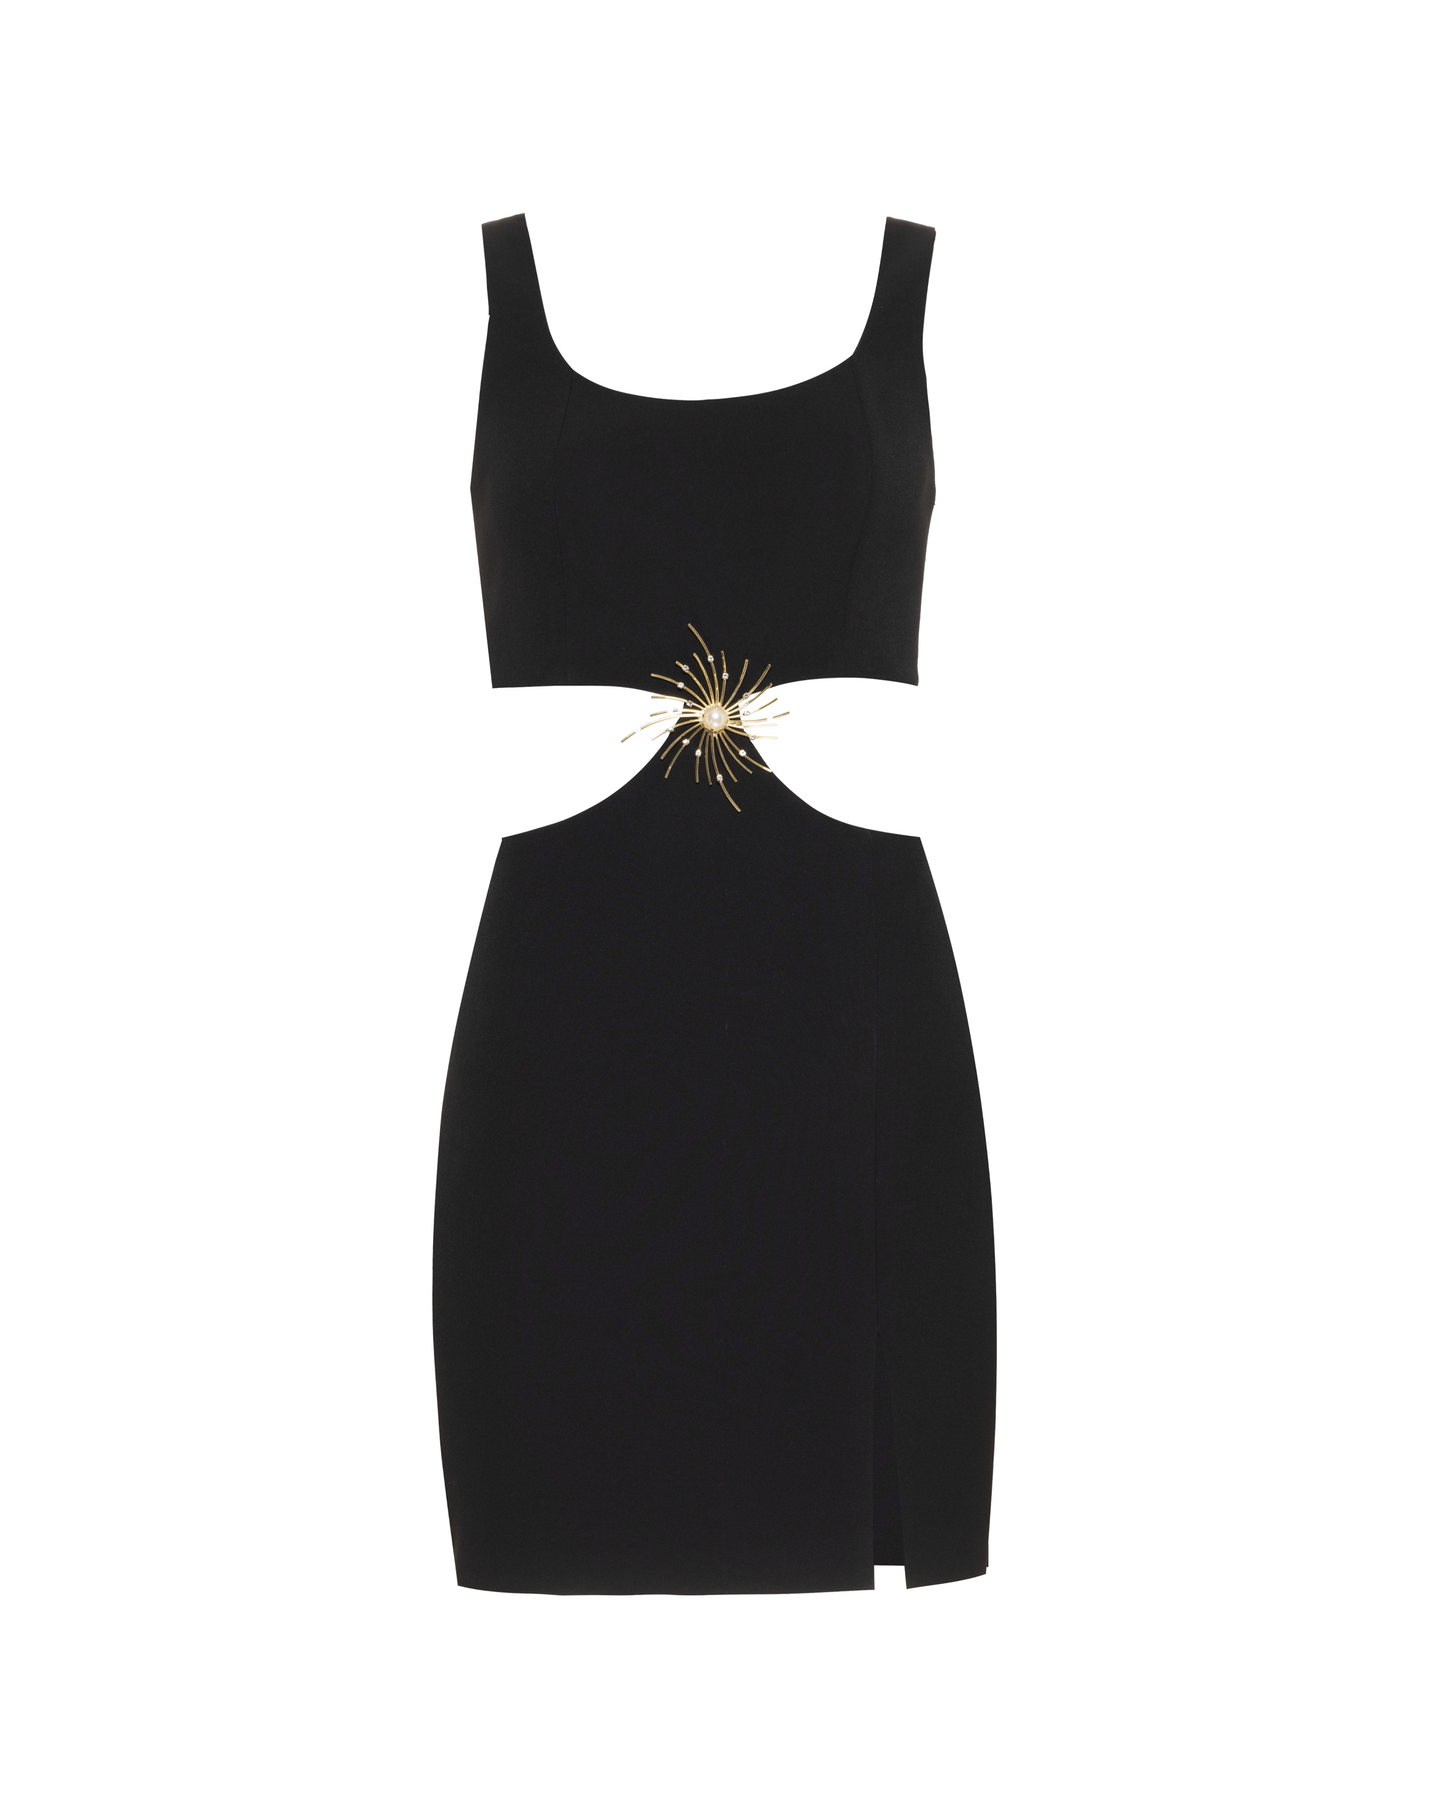 Soleil Cut-Out Mini Dress - Premium Short dress from Marina St Barth - Just $550! Shop now at Marina St Barth